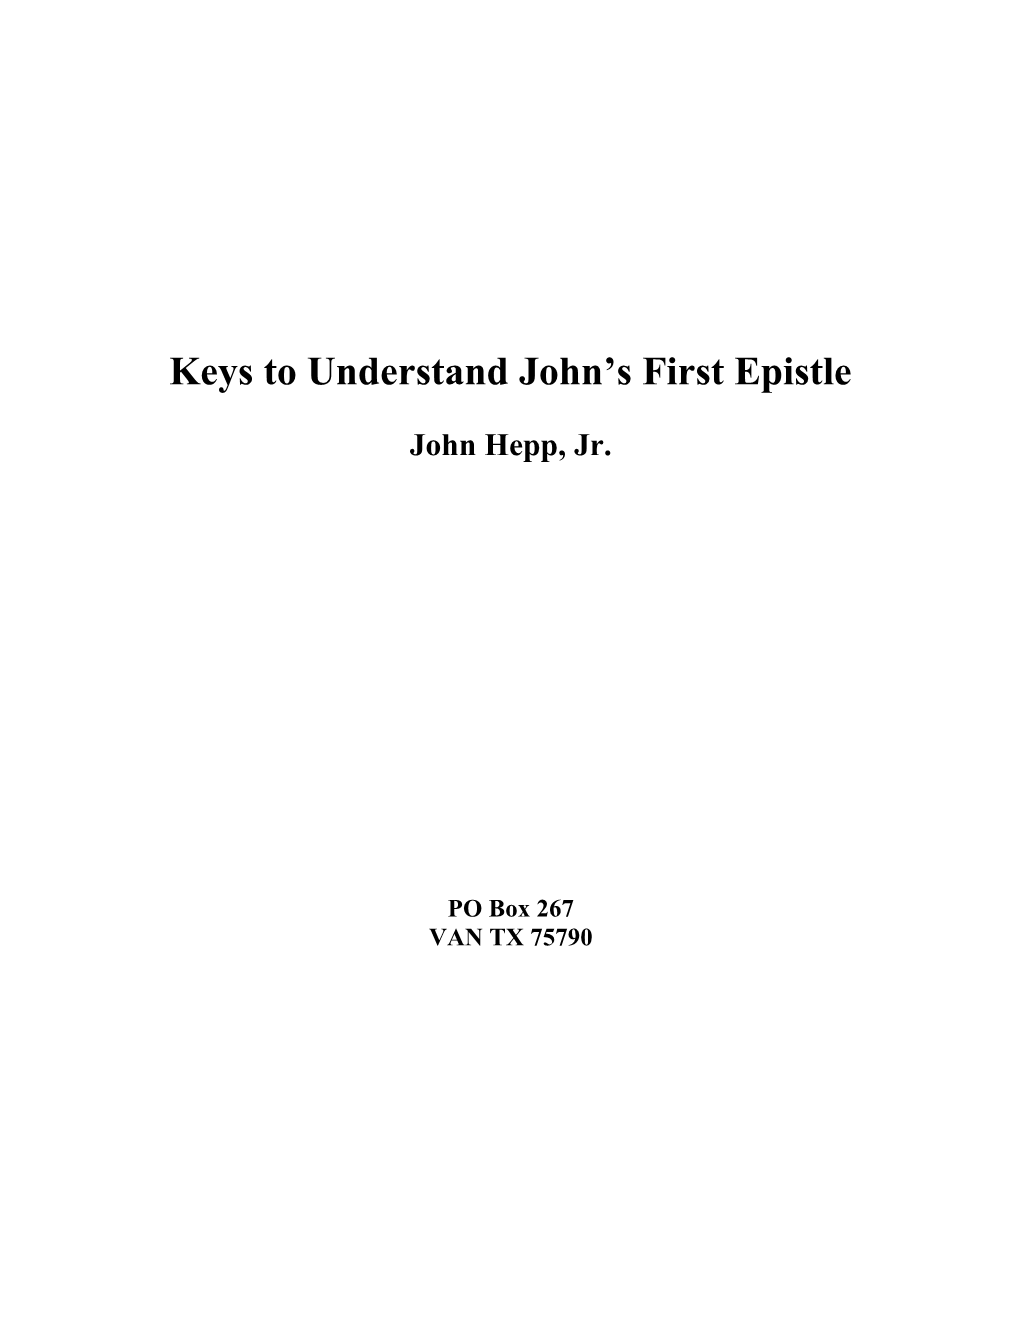 The Purpose of the Epistle of 1 John